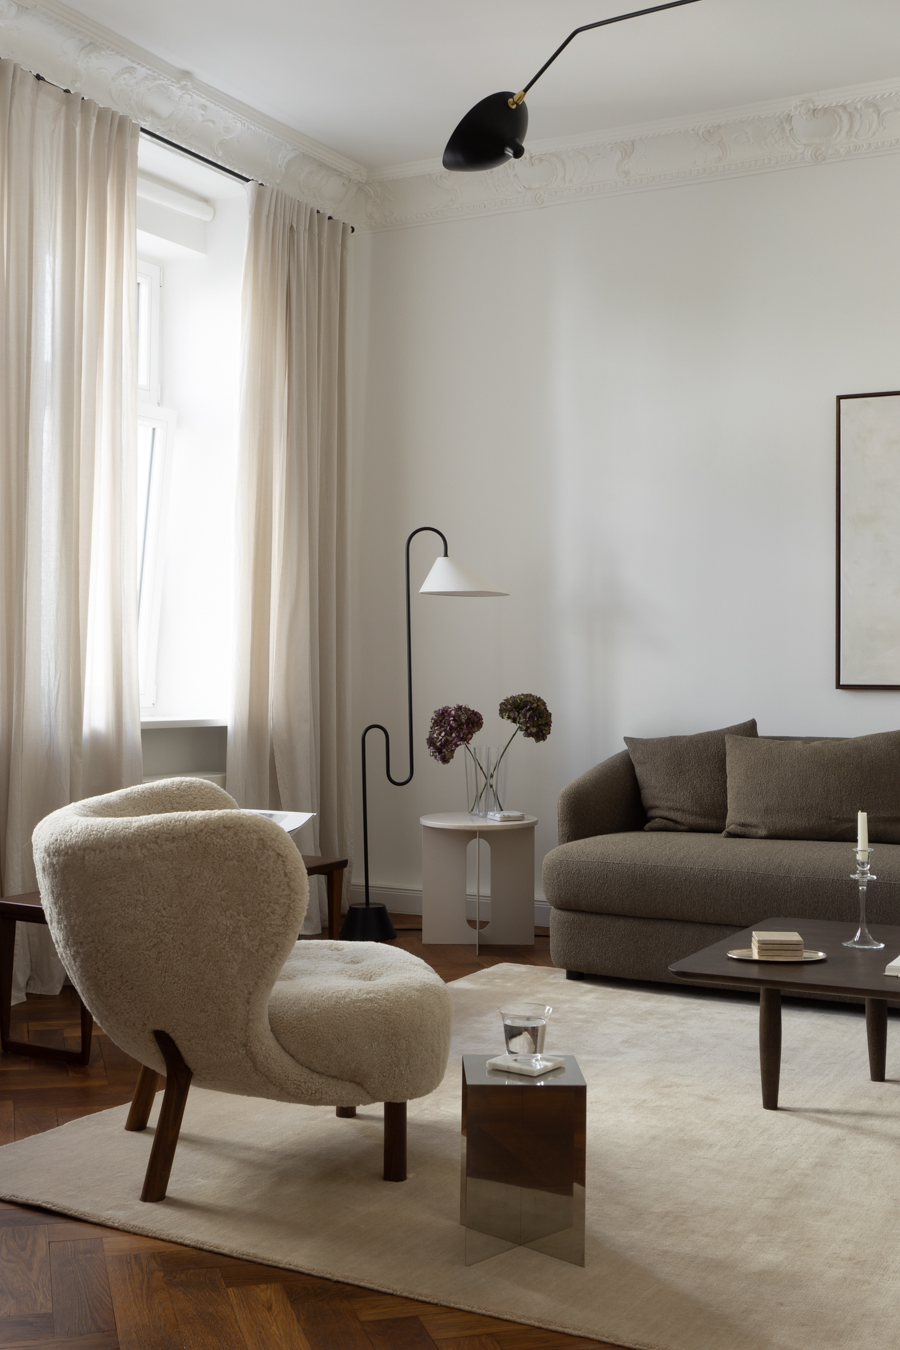 Massimo Copenhagen Handwoven Rugs | Interior Design Inspiration, Rebecca Goddard's Munich Apartment | RG Daily